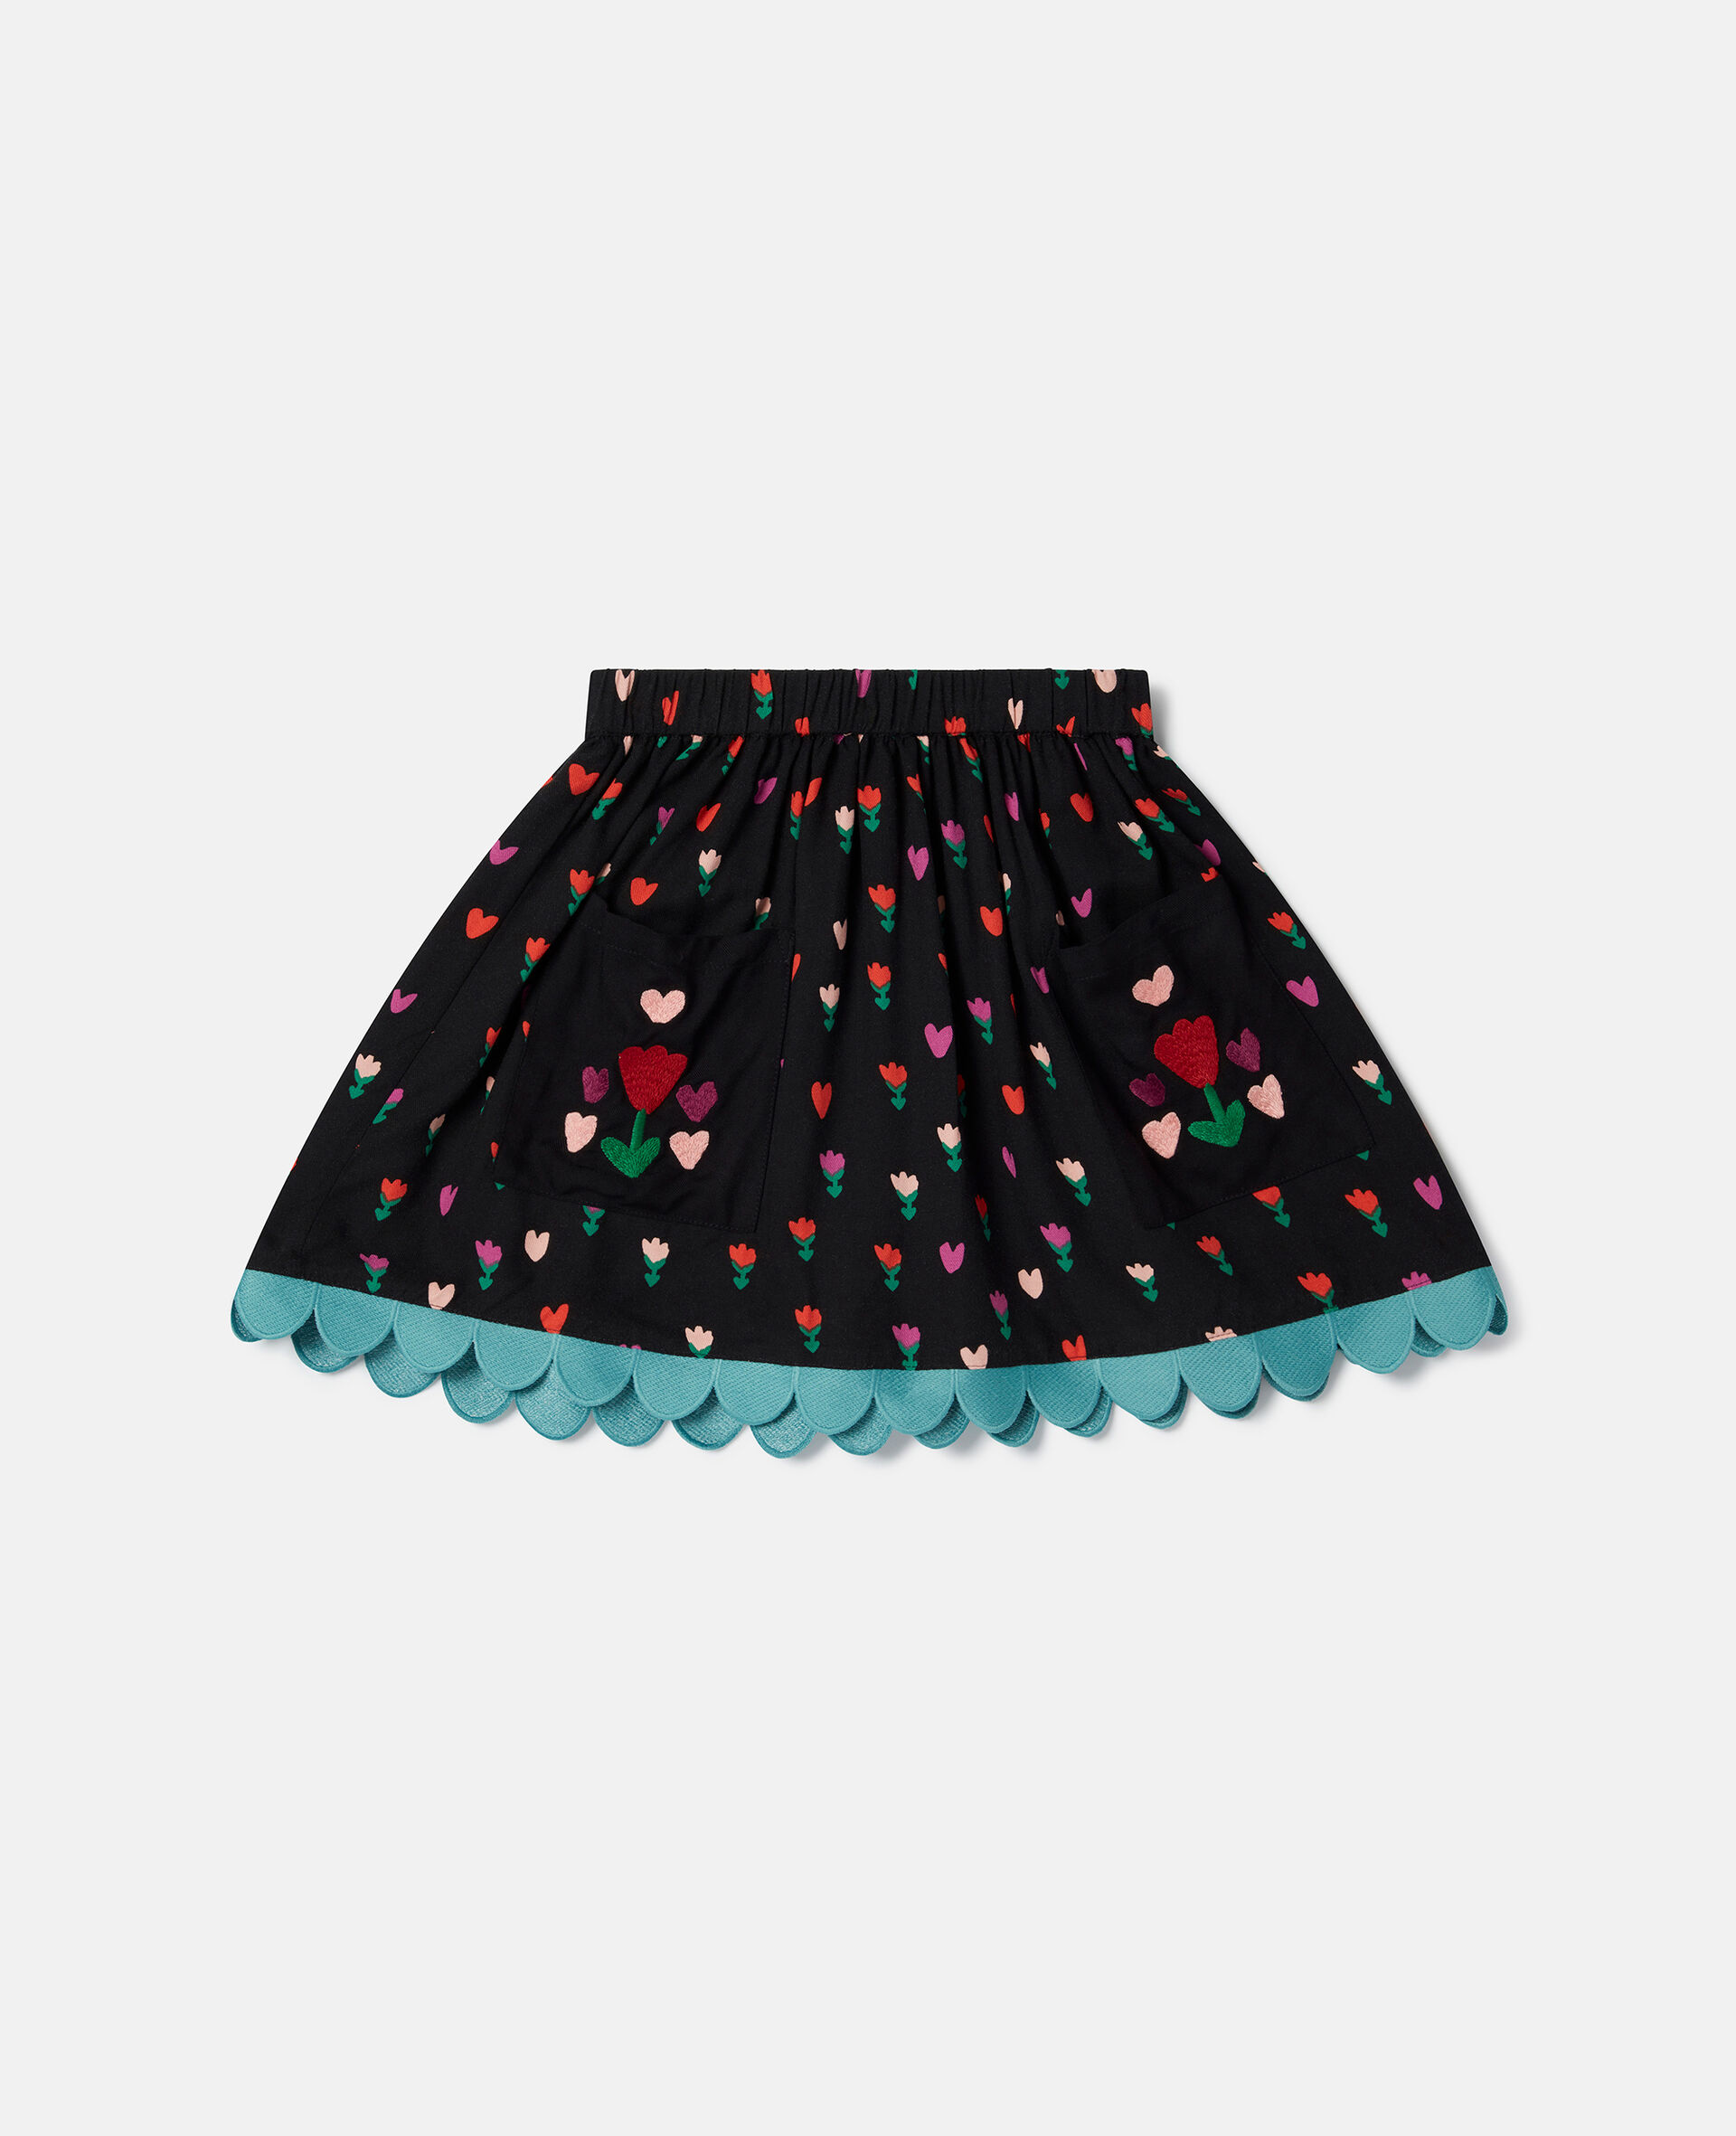 Tulip Print Skater Skirt-Black-large image number 0